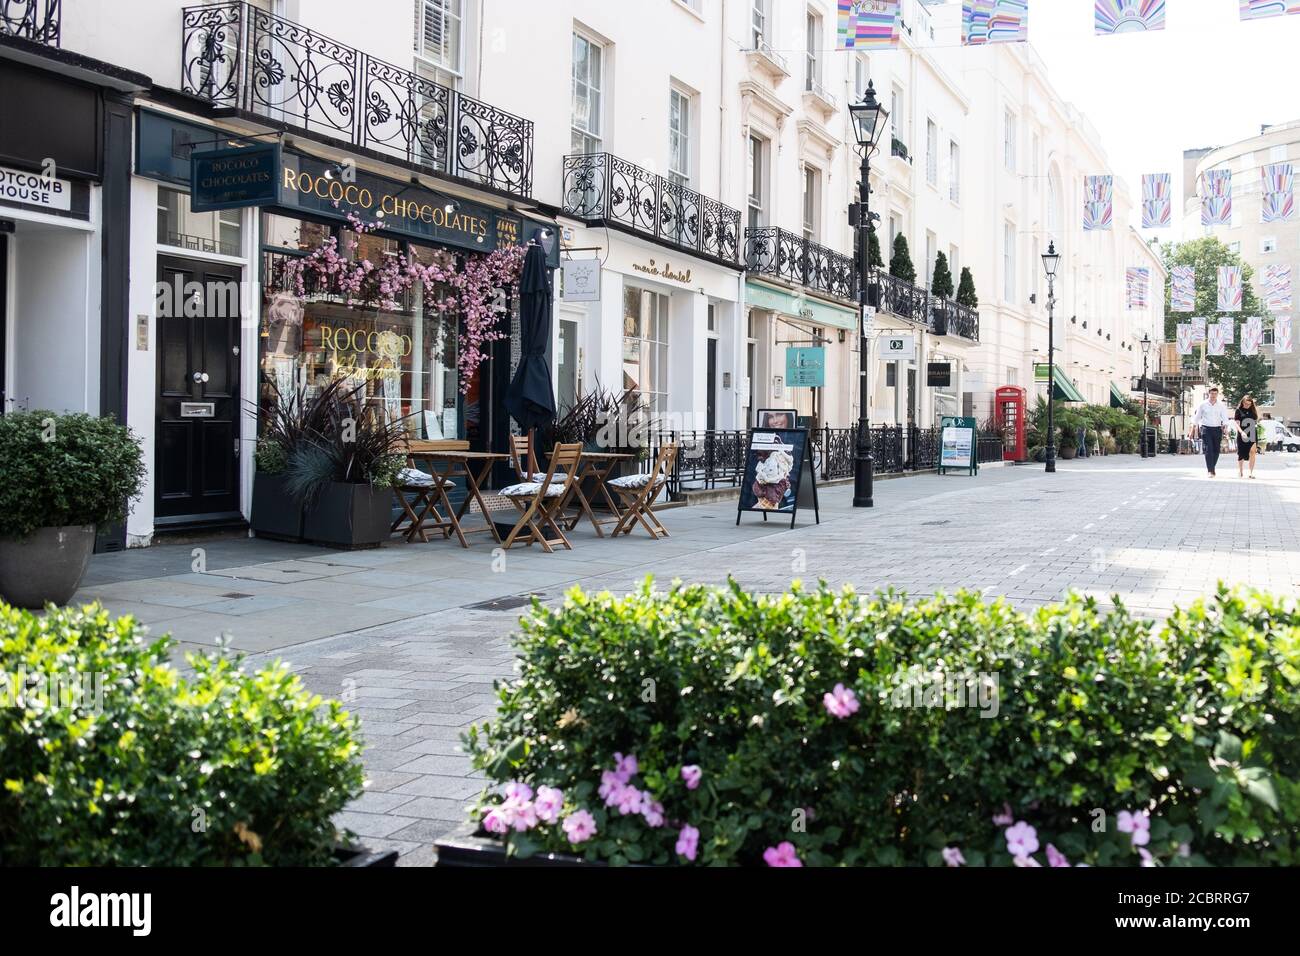 London- August, 2020: Motcomb Street in Knightsbridge / Belgravia. An upmarket shopping street know for its luxury fashion shops Stock Photo